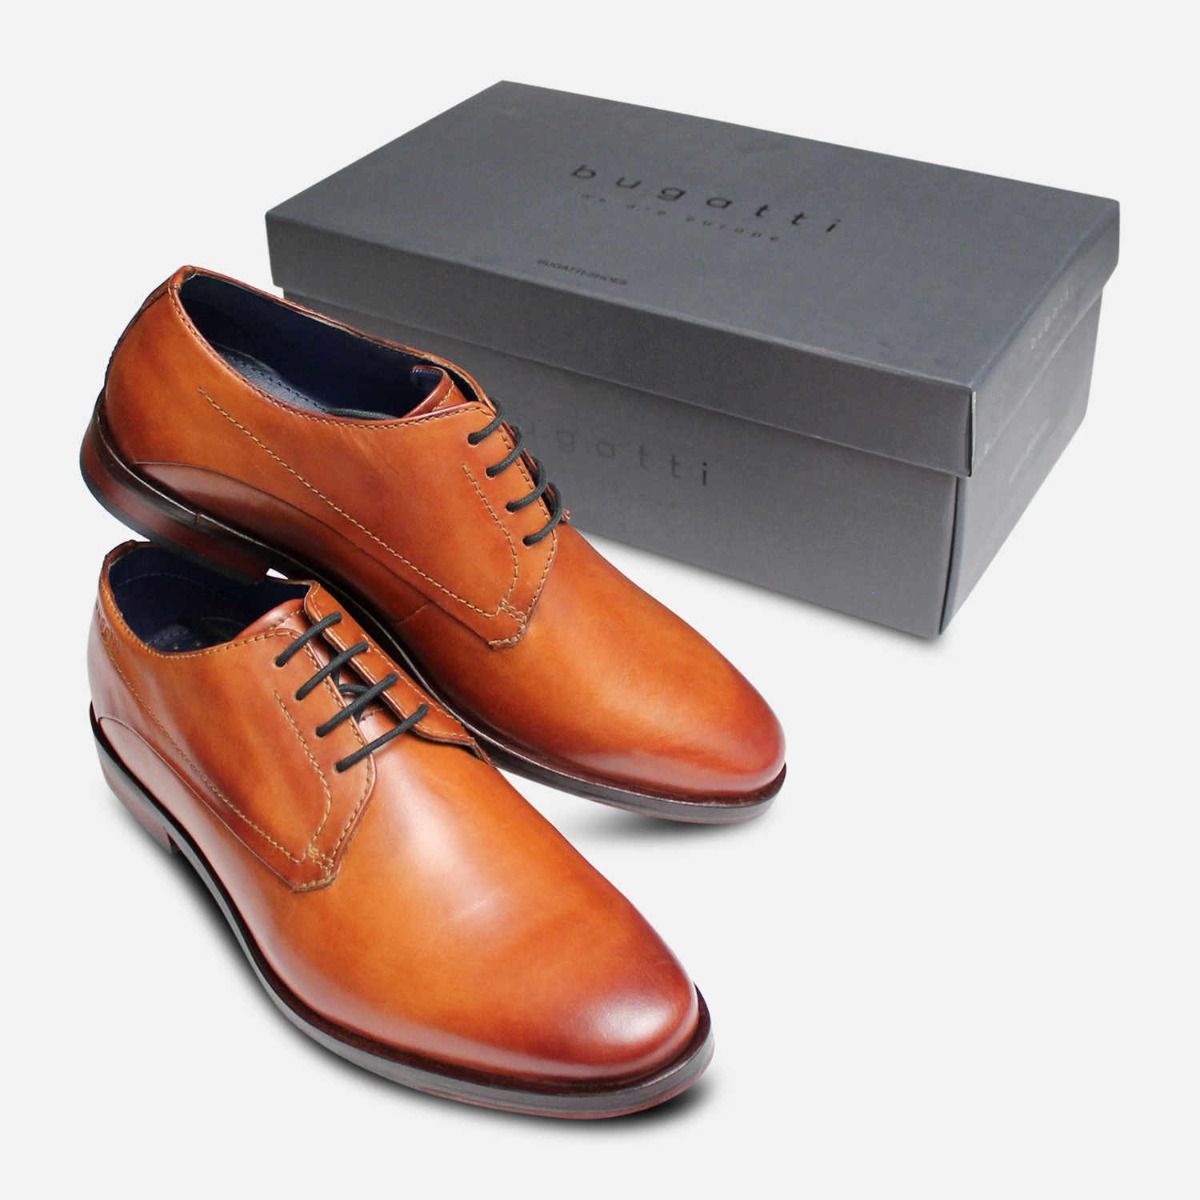 bugatti formal shoes